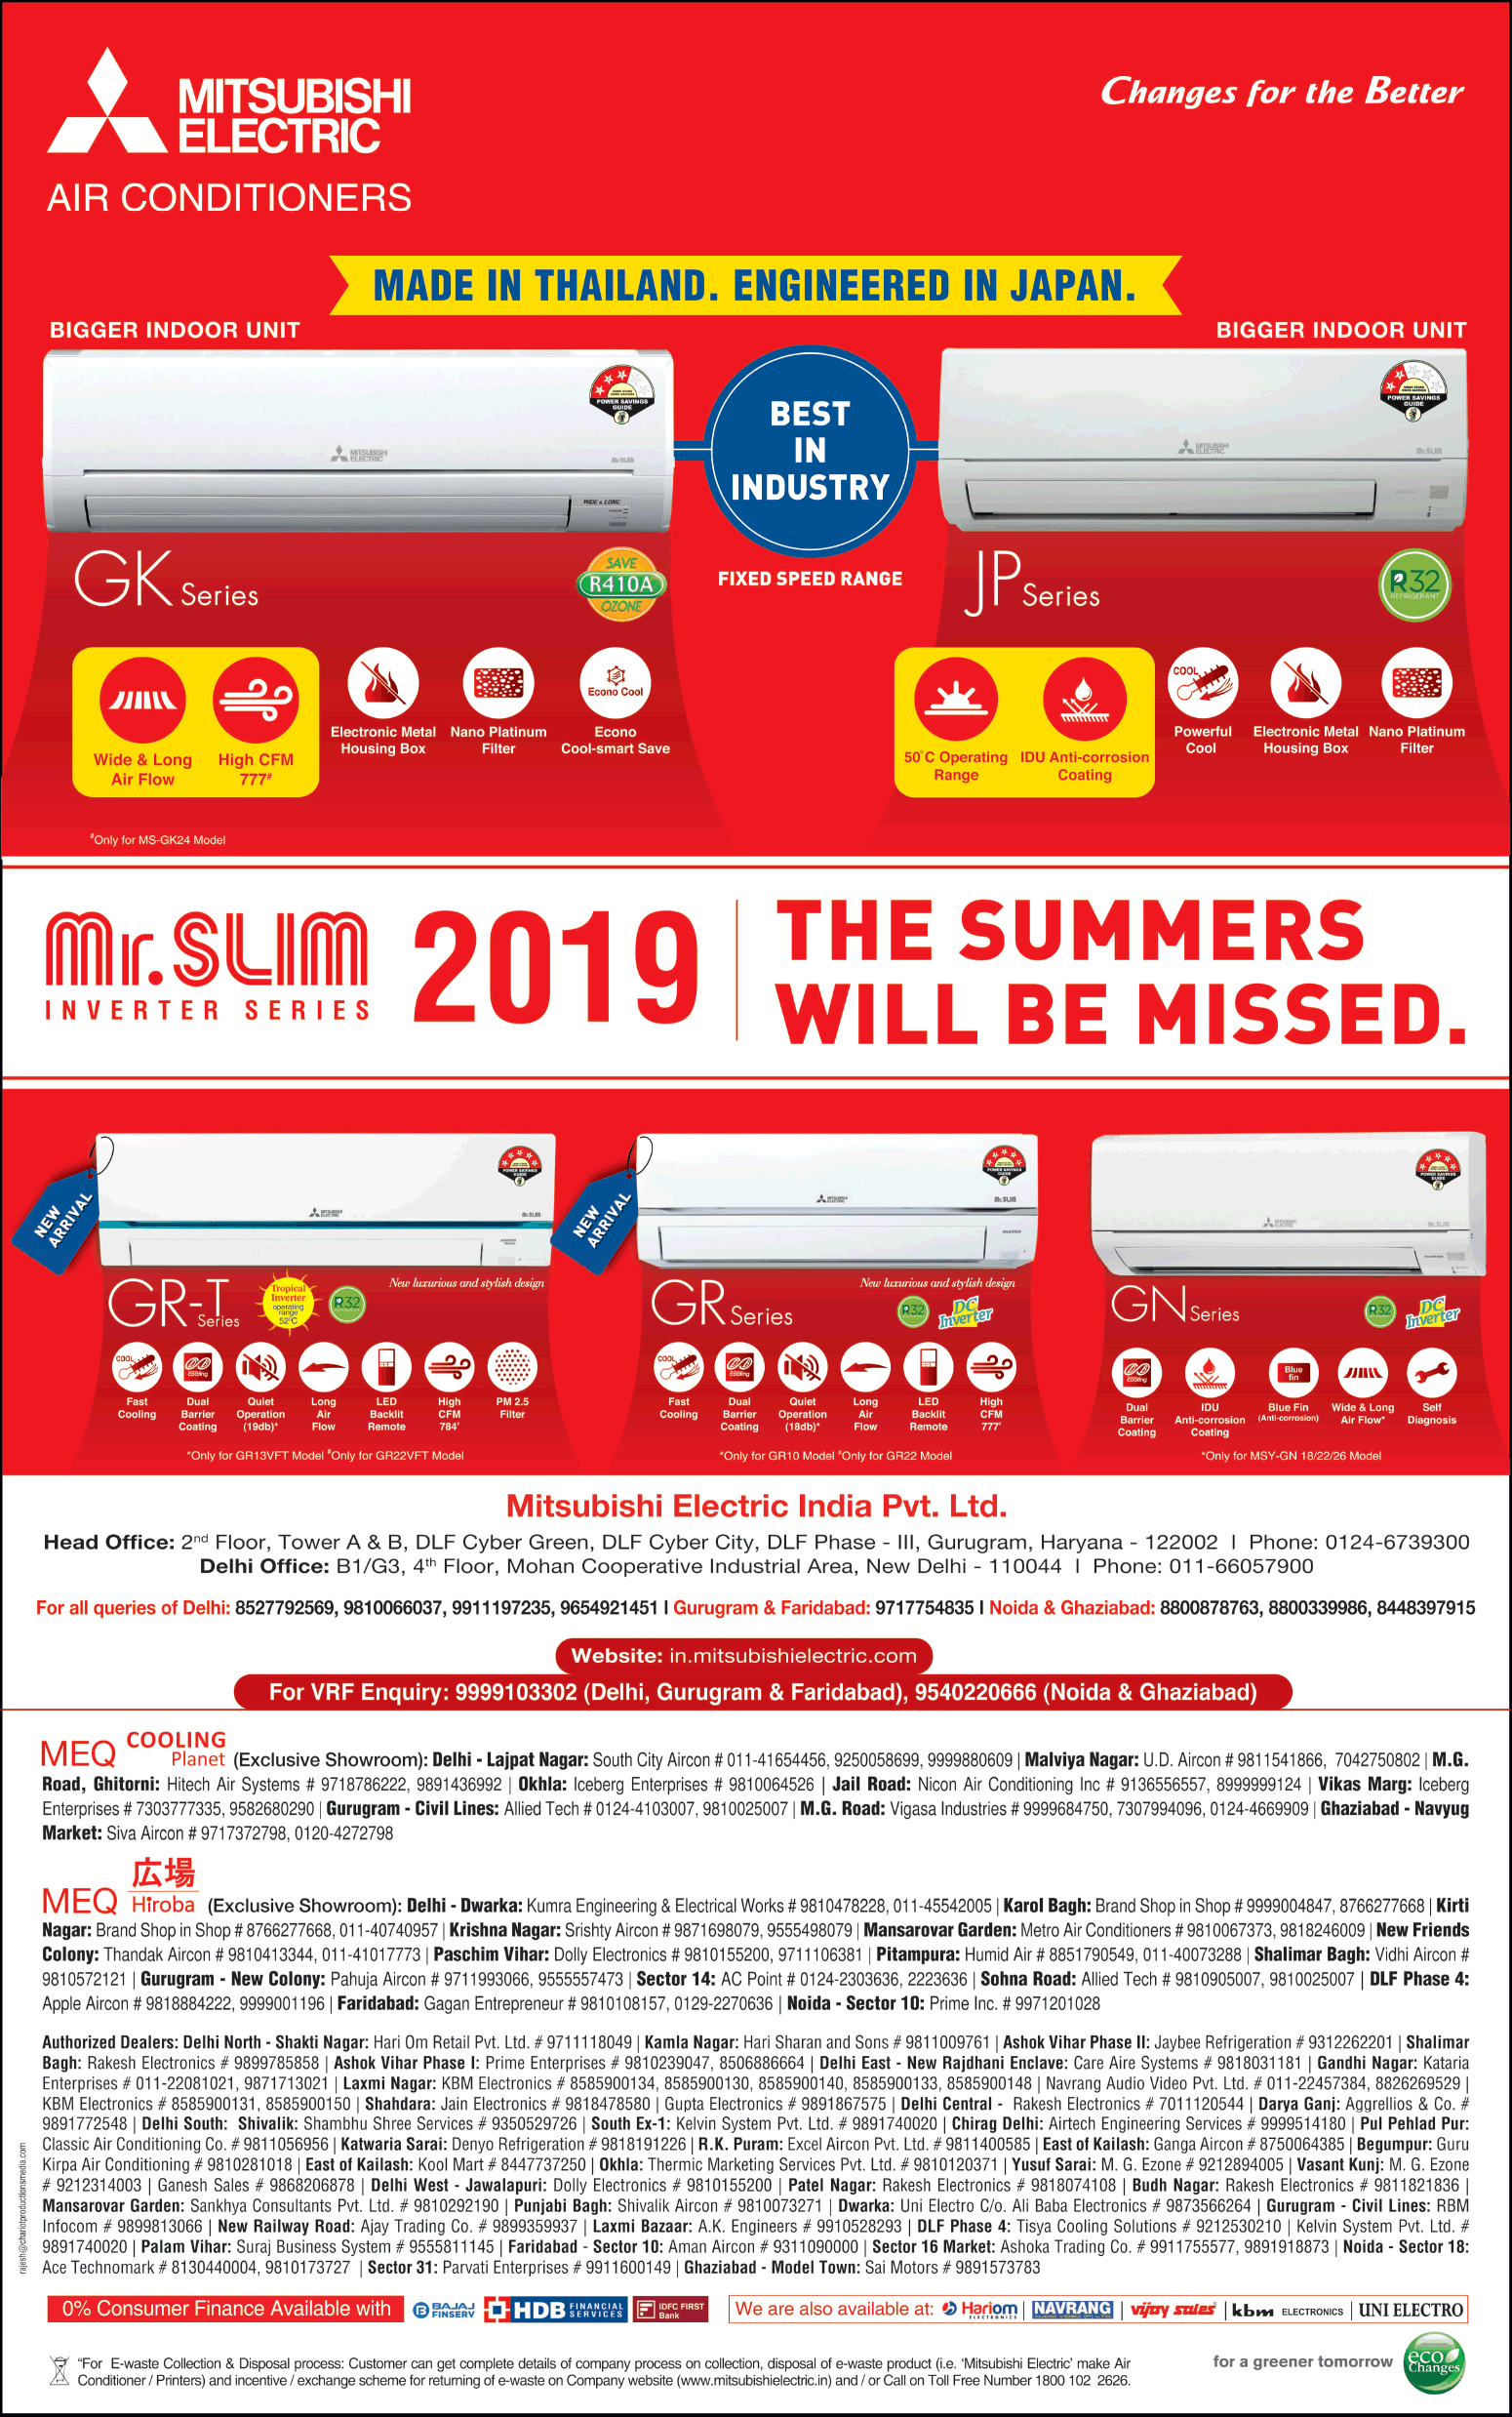 mitsibushi-electric-air-conditioners-mr-slim-inverter-series-inverter-series-ad-delhi-times-05-05-2019.png